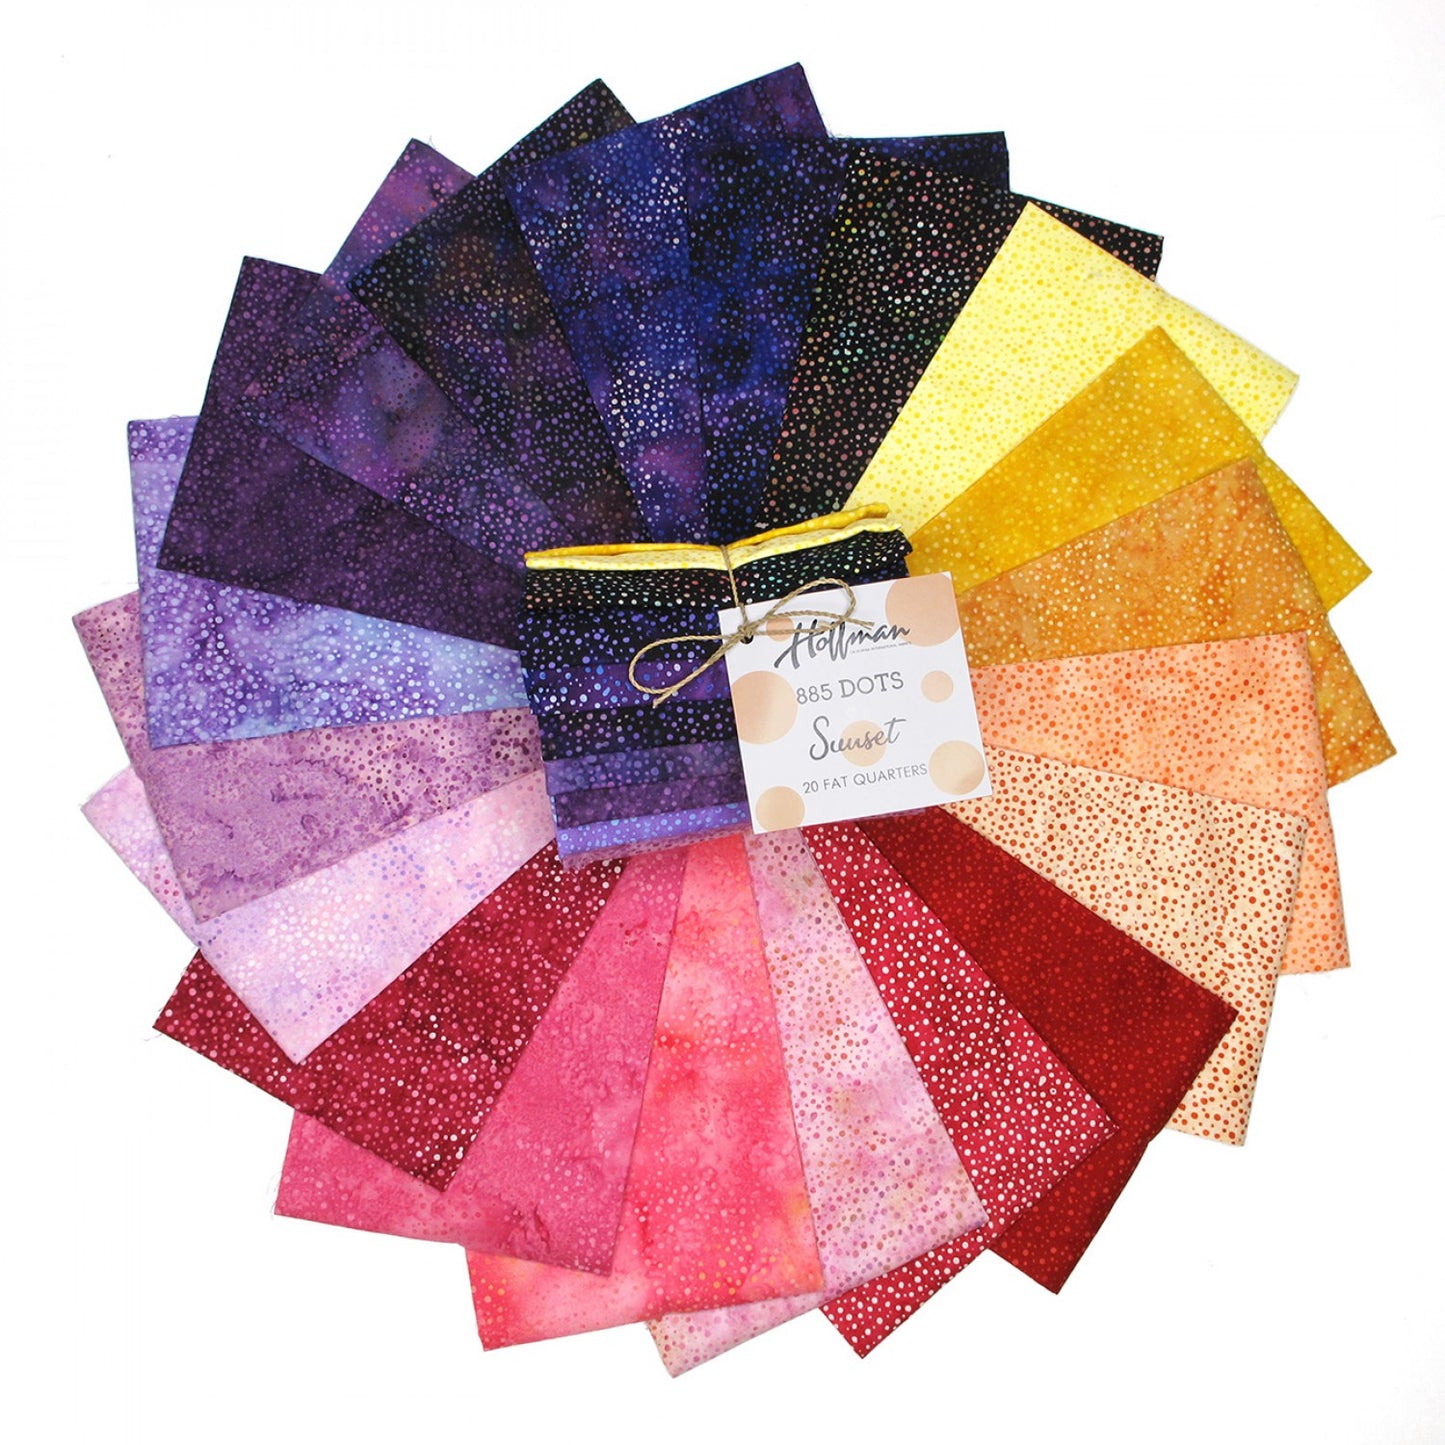 Fat Quarter Bundle - From Hoffman Fabrics 885 Bali Dot Batiks Collection - Sunset